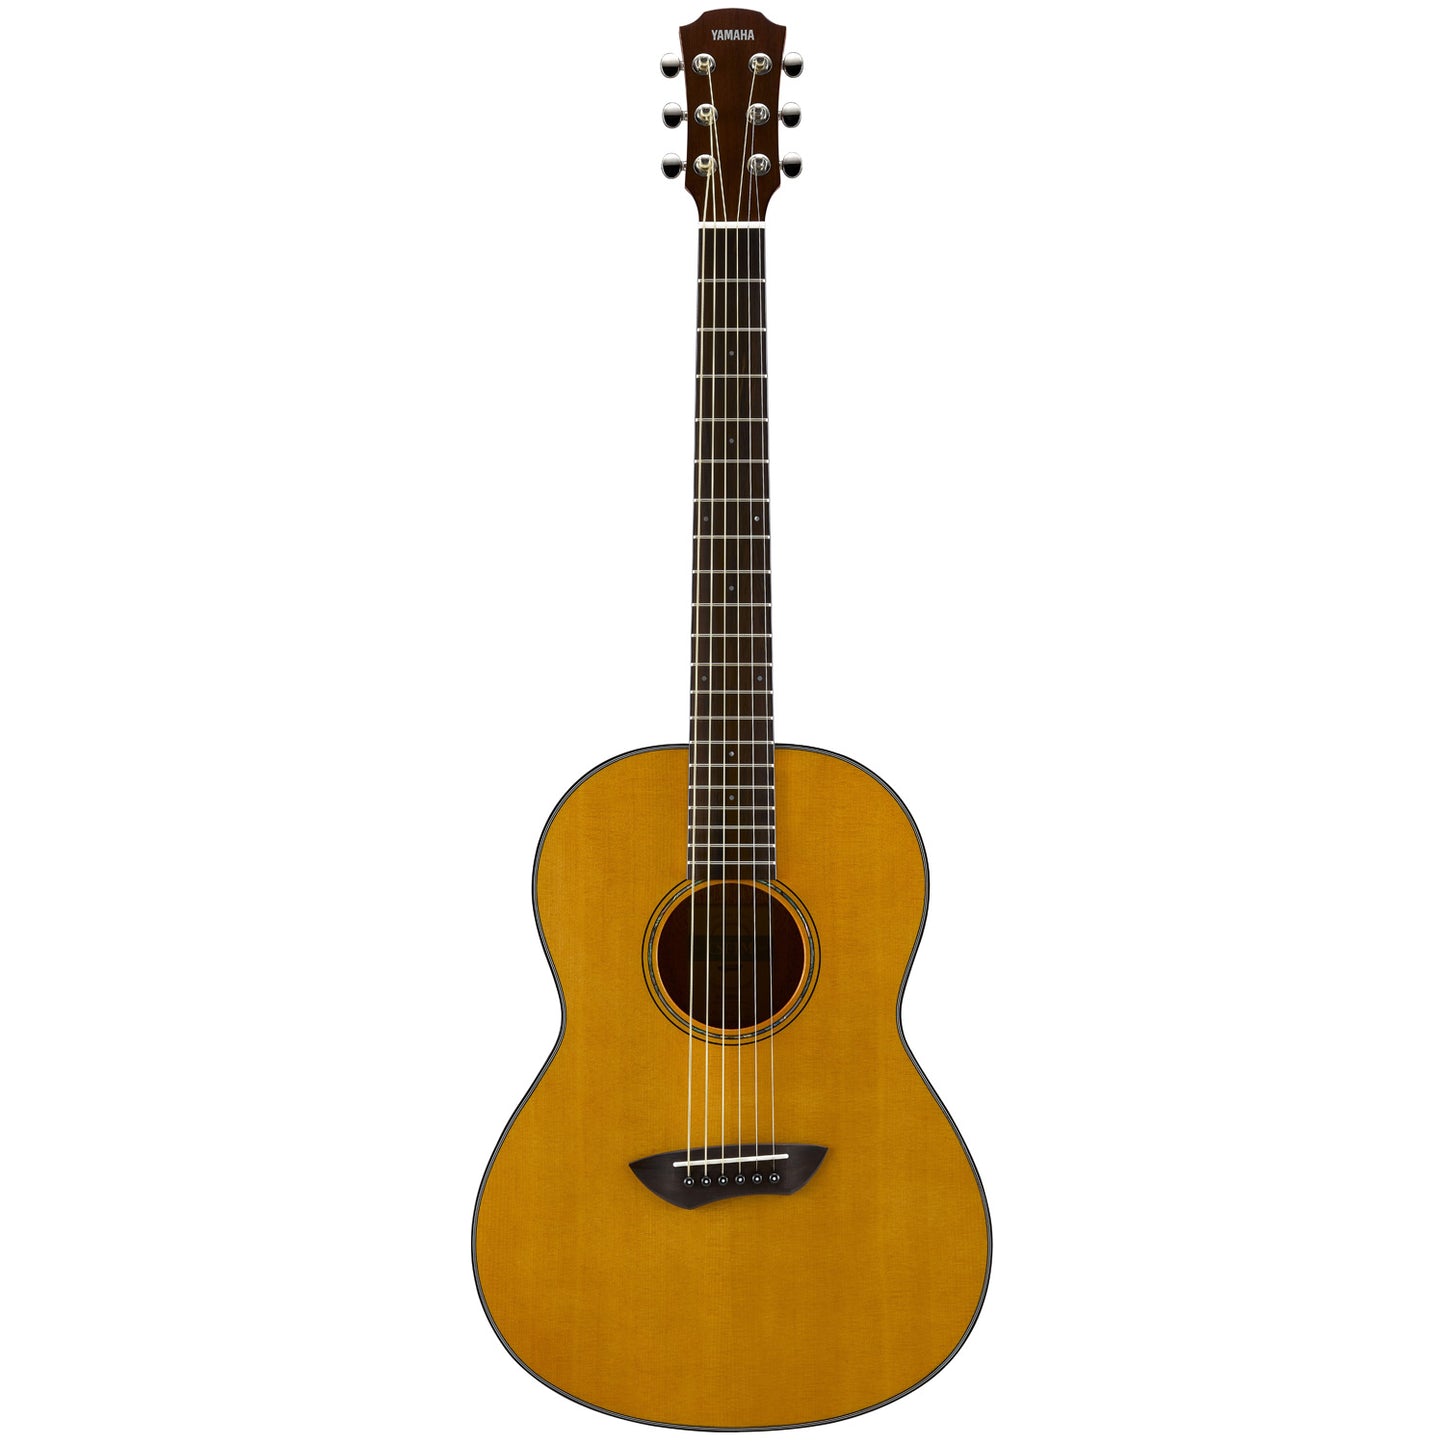 Yamaha CSF1M Vintage Natural Parlor Guitar, Mahogany Back and Sides, Solid Spruce Top